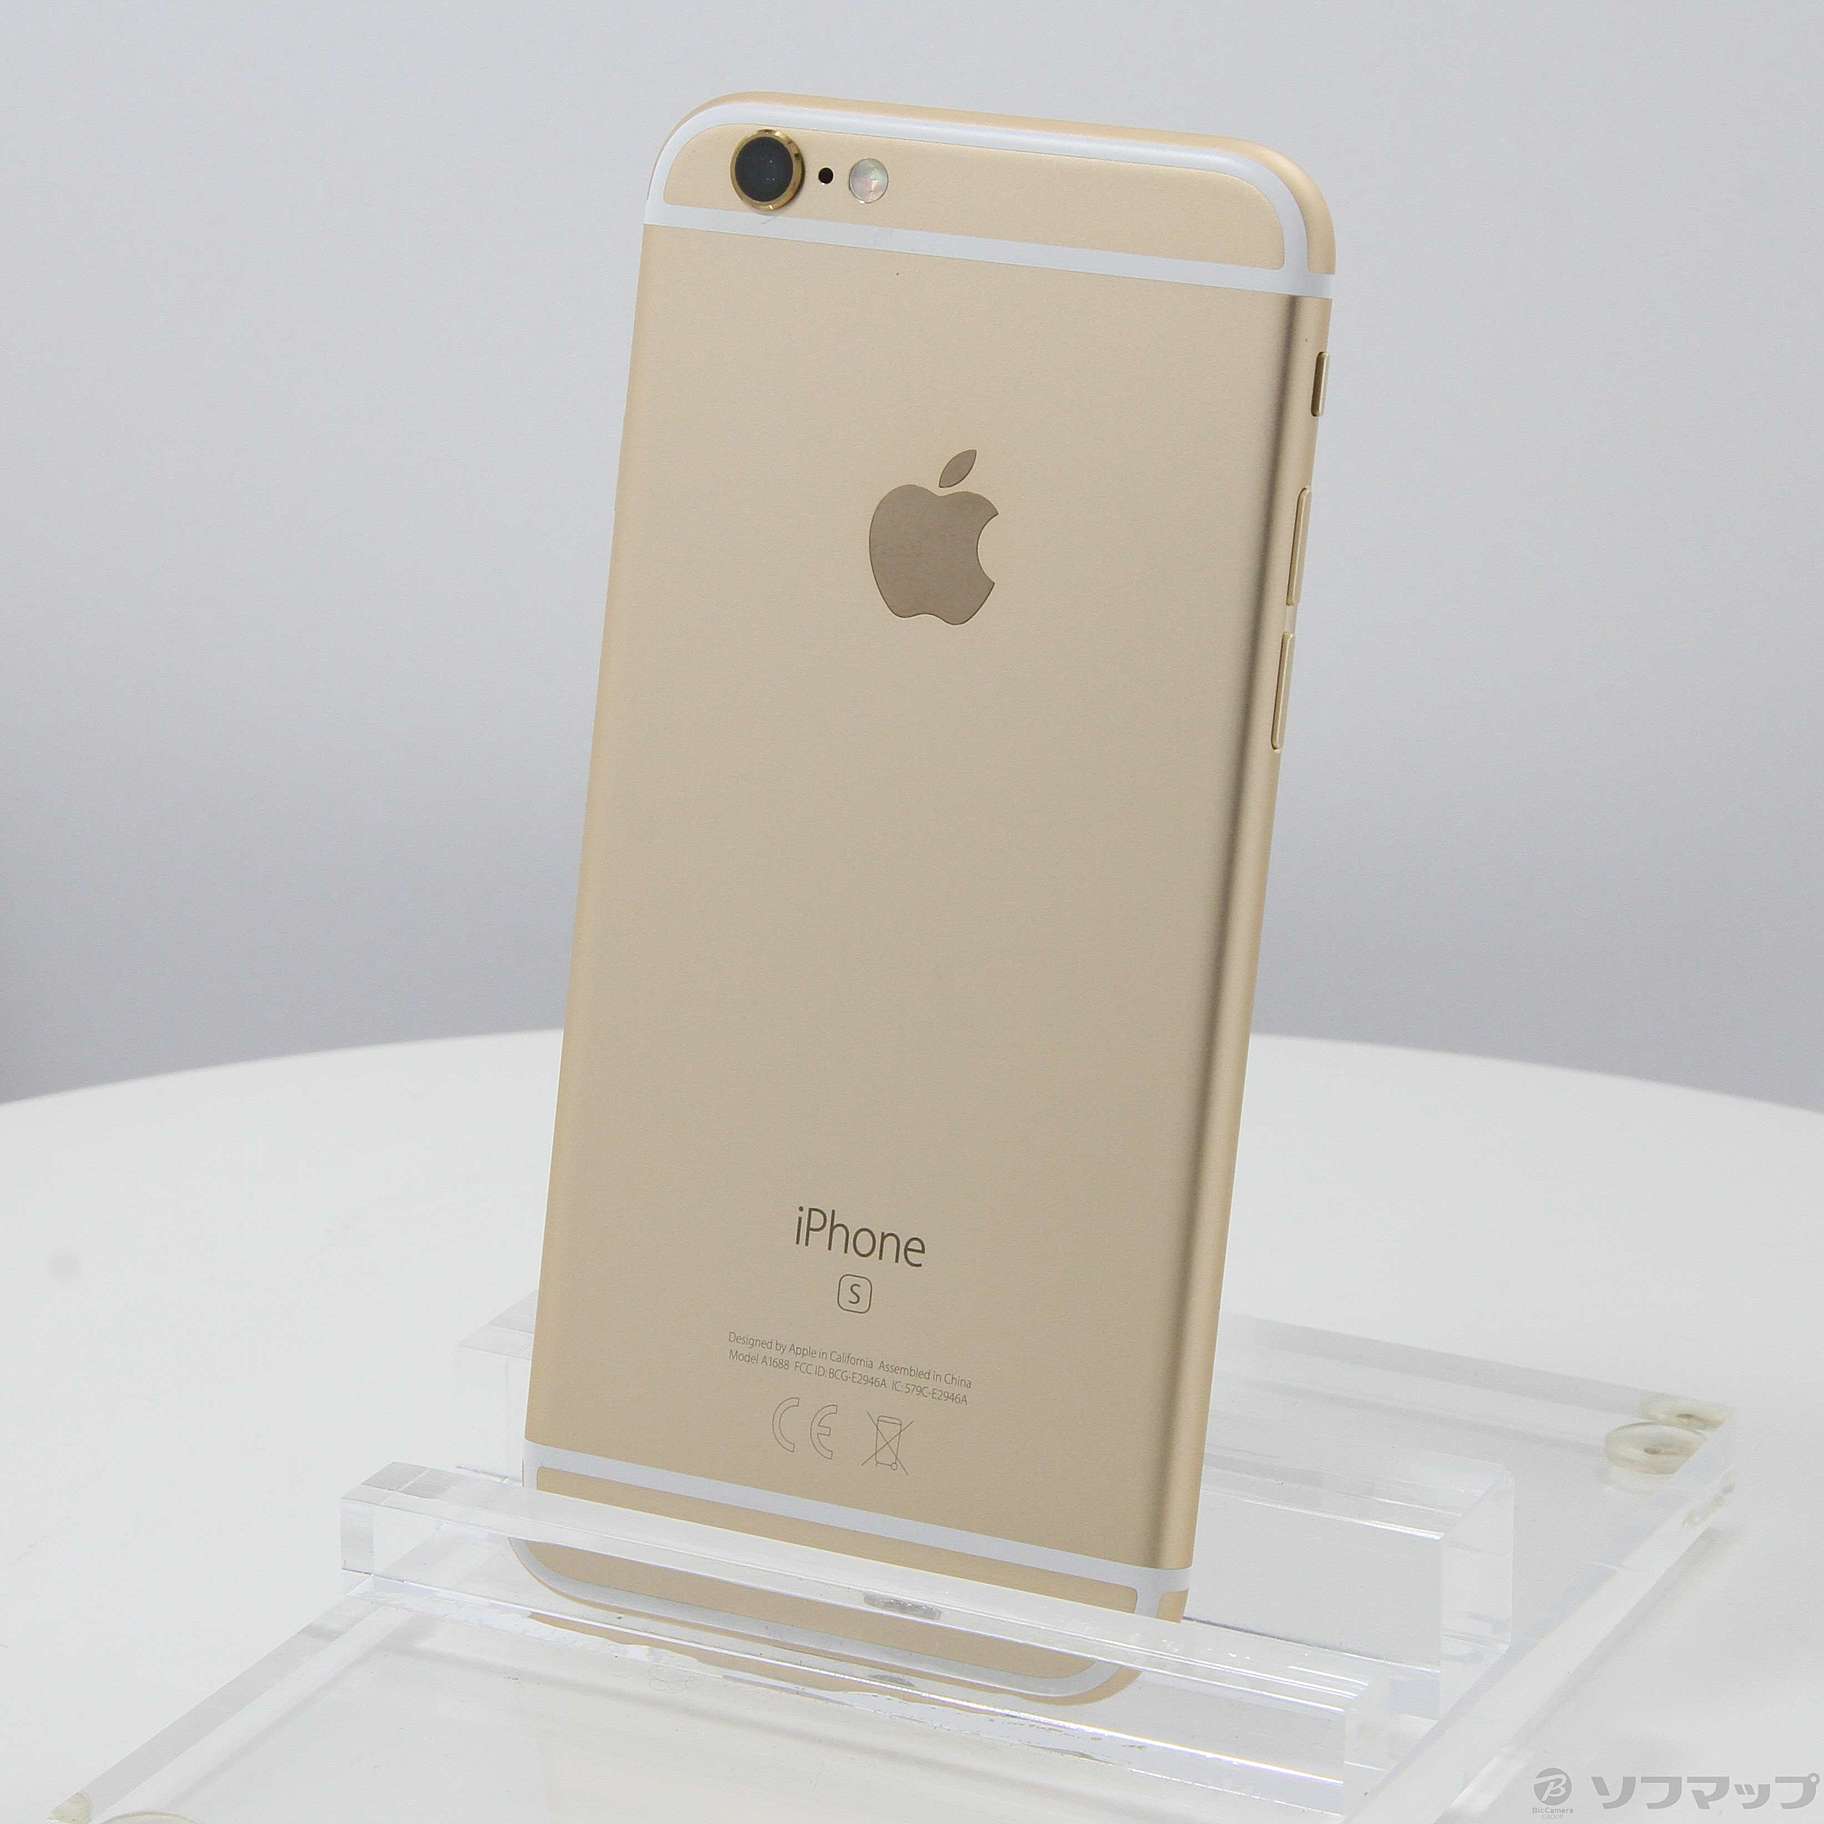 iPhone 6s 32 GB - ゴールド - SIMフリー